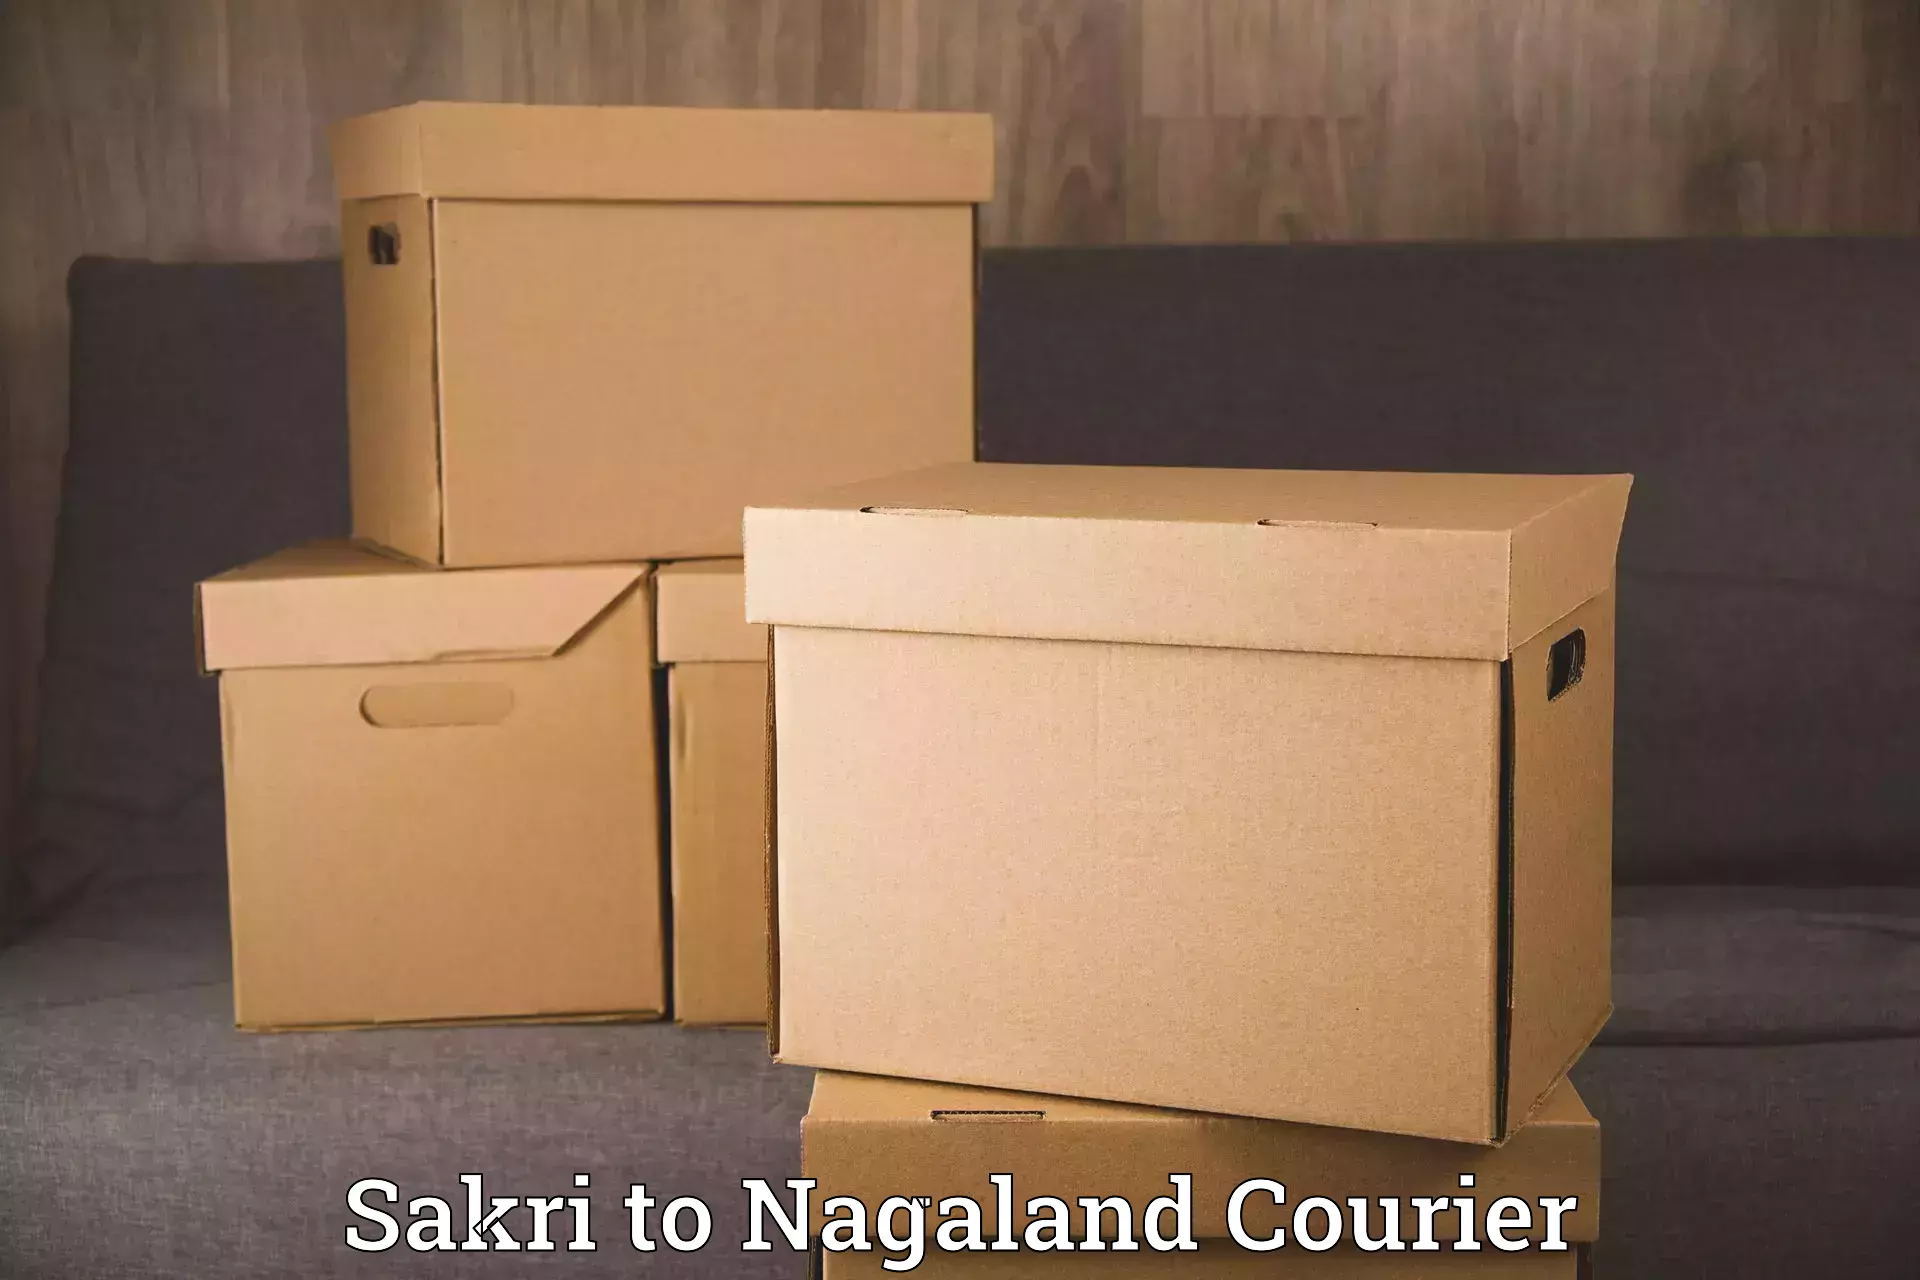 Furniture moving specialists Sakri to Nagaland